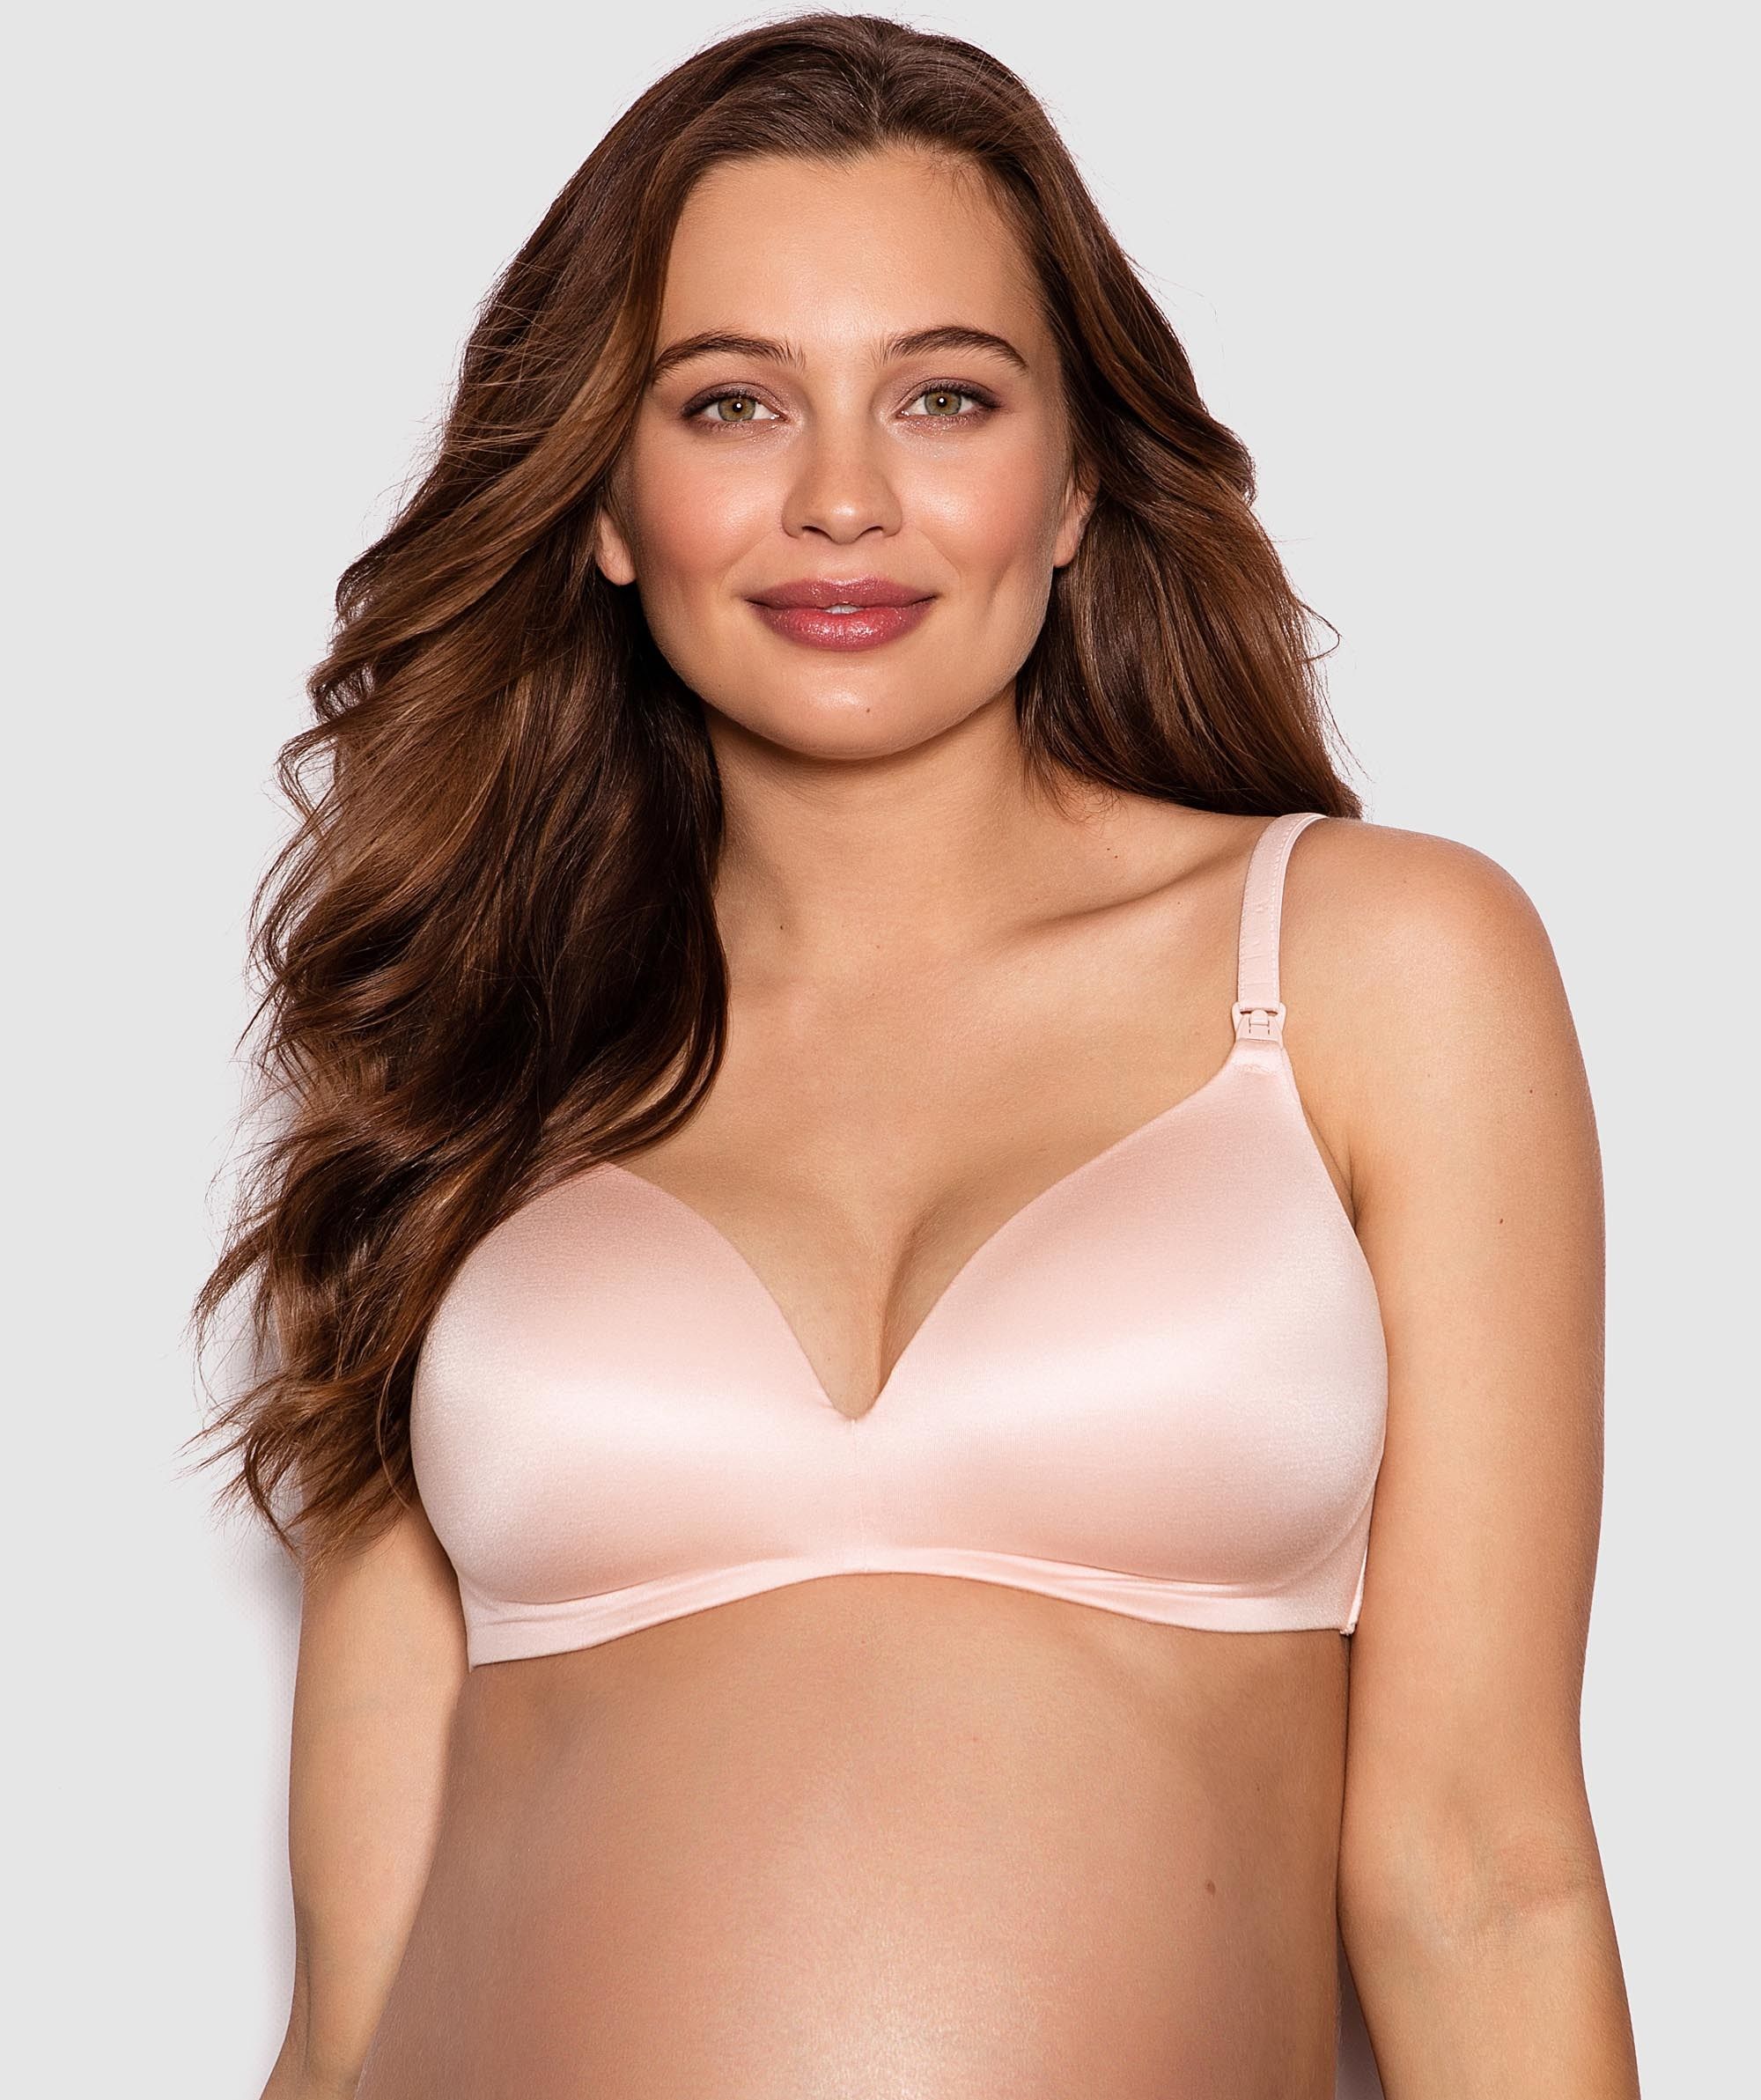 Women's Bra Full Coverage Plus Size Wirefree Cotton Maternity Nursing Bra  (Color : Pink, Size : 36F)